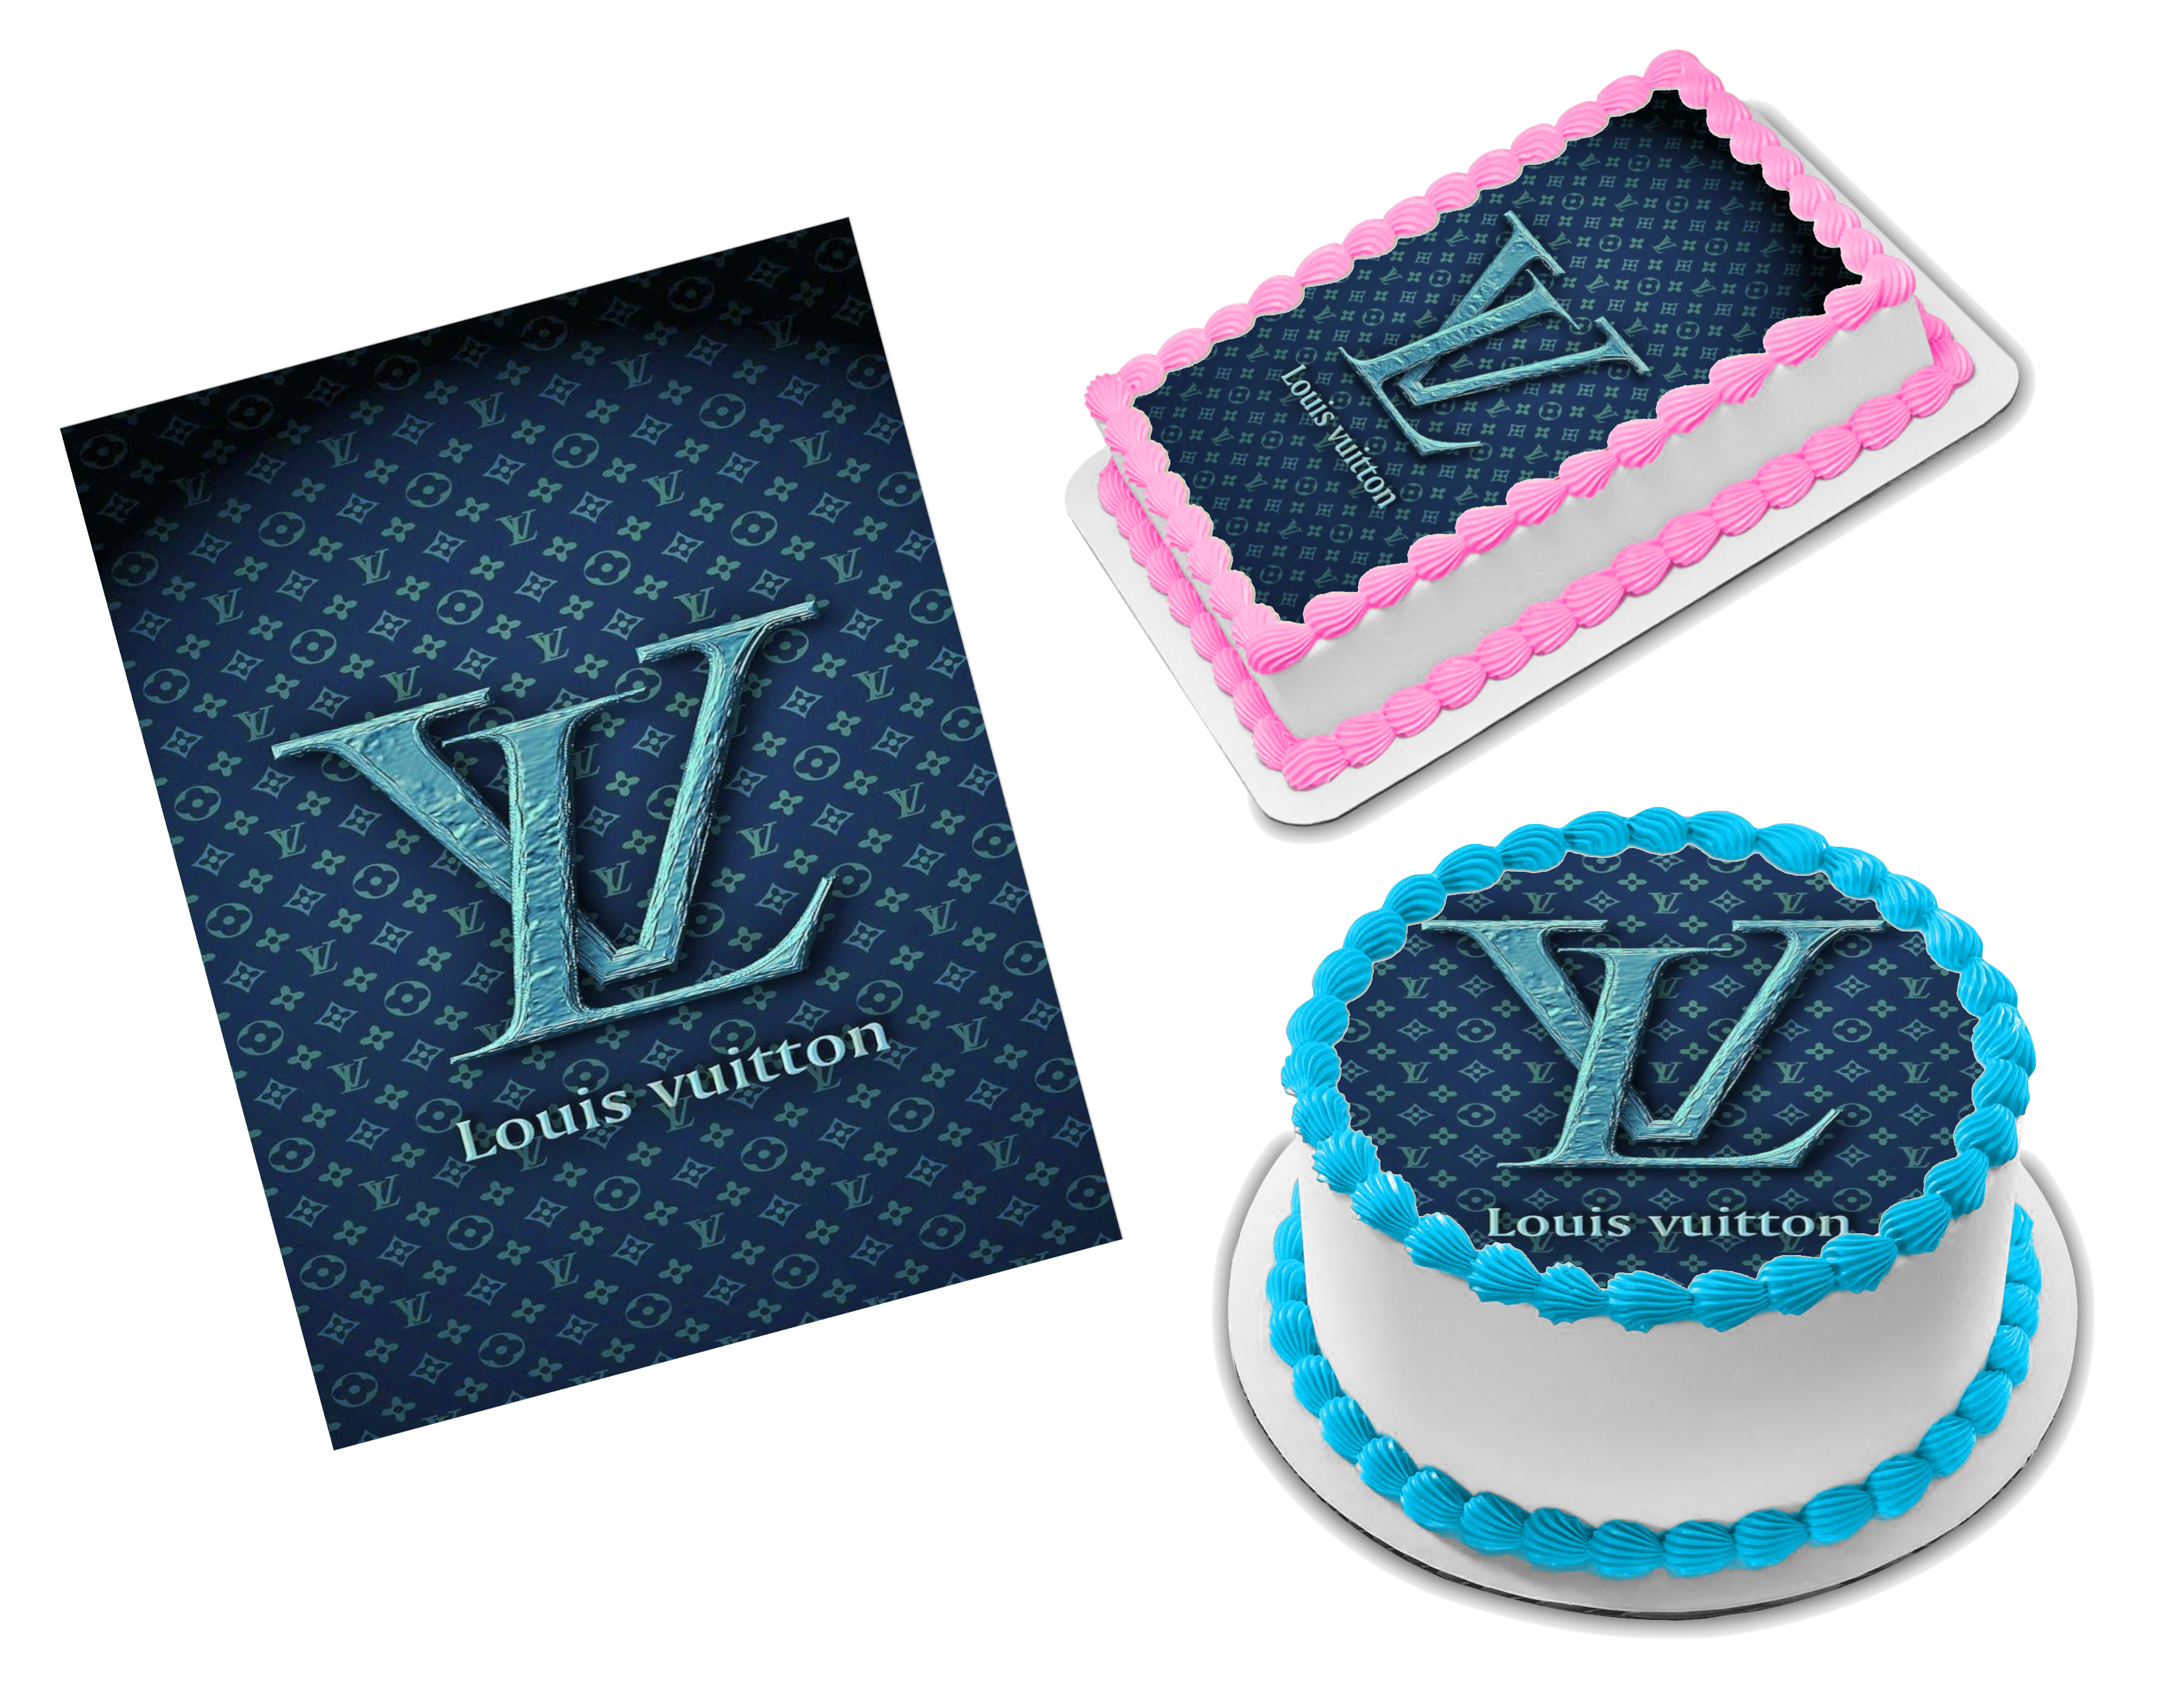 Louis Vuitton Blue White Edible Image Frosting Sheet #40 (70+